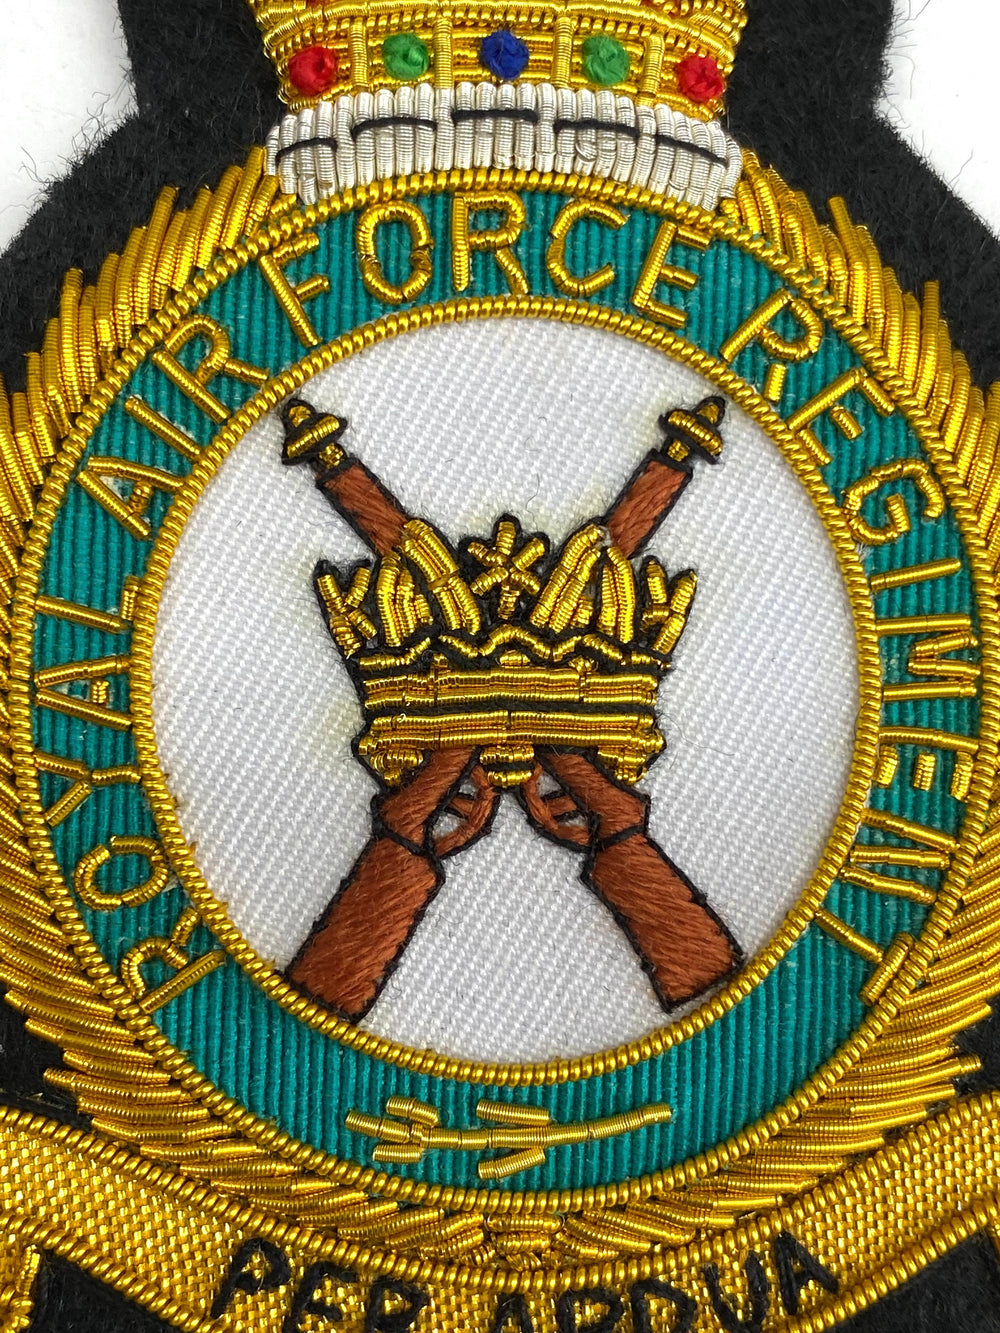 Royal Air Force crest 